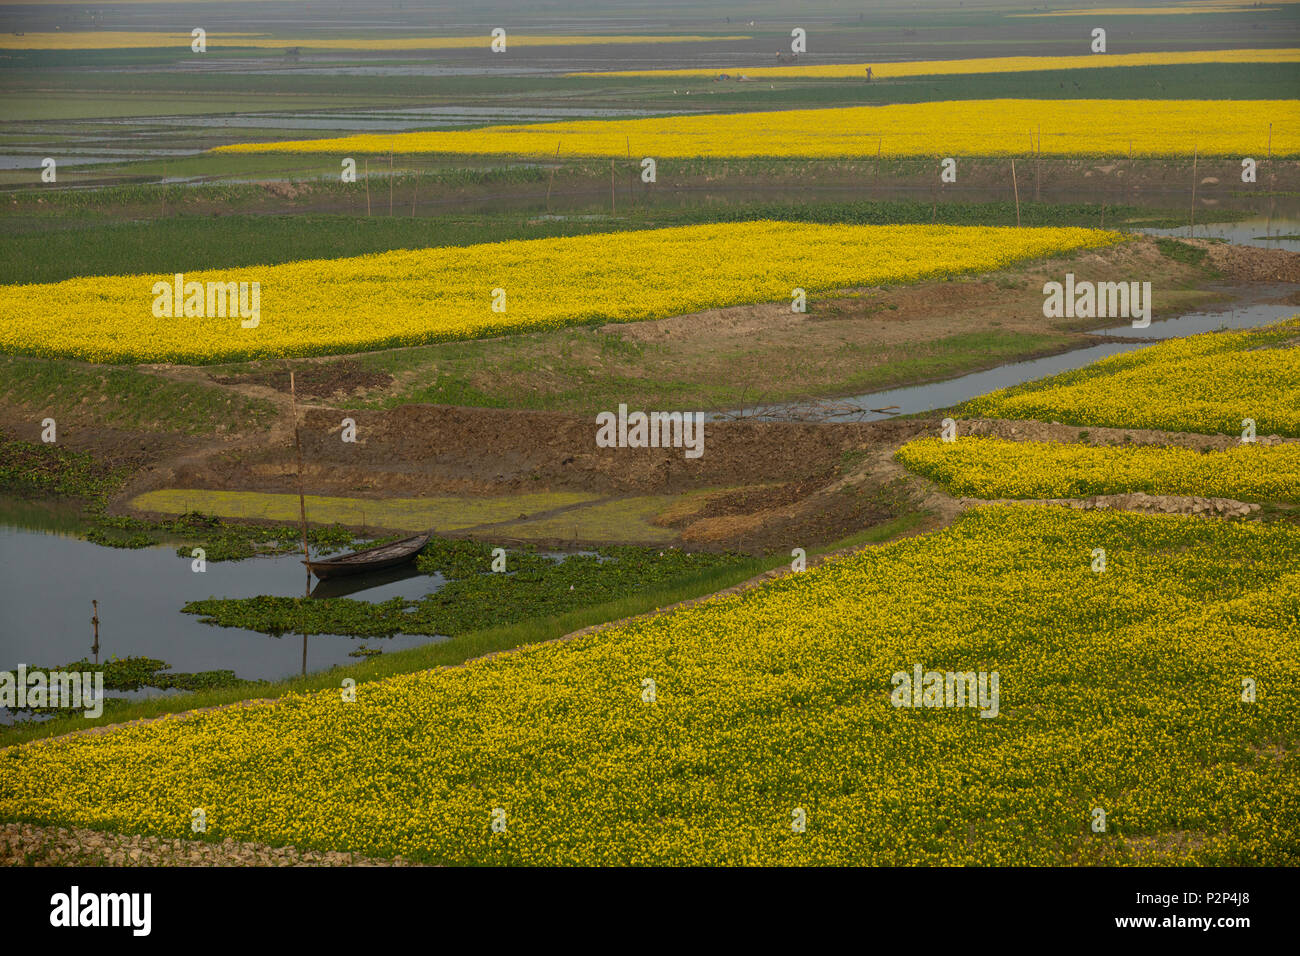 A full bloomed mustard field at Chalan Beel in Natore. Bangladesh Stock Photo